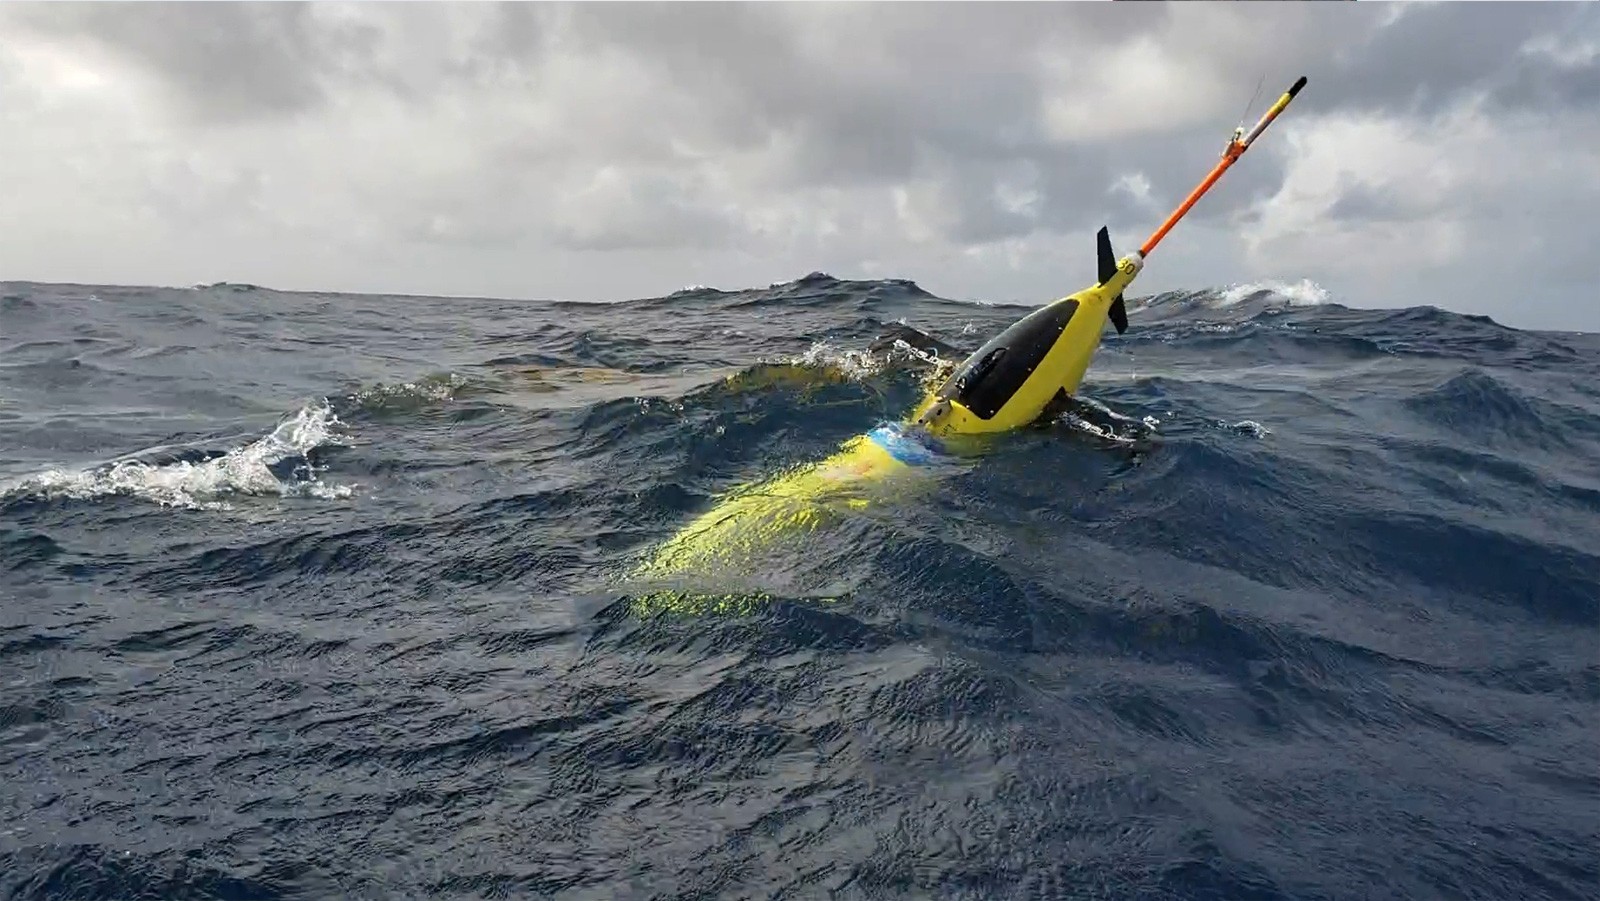 Ocean glider taking measurements in the water